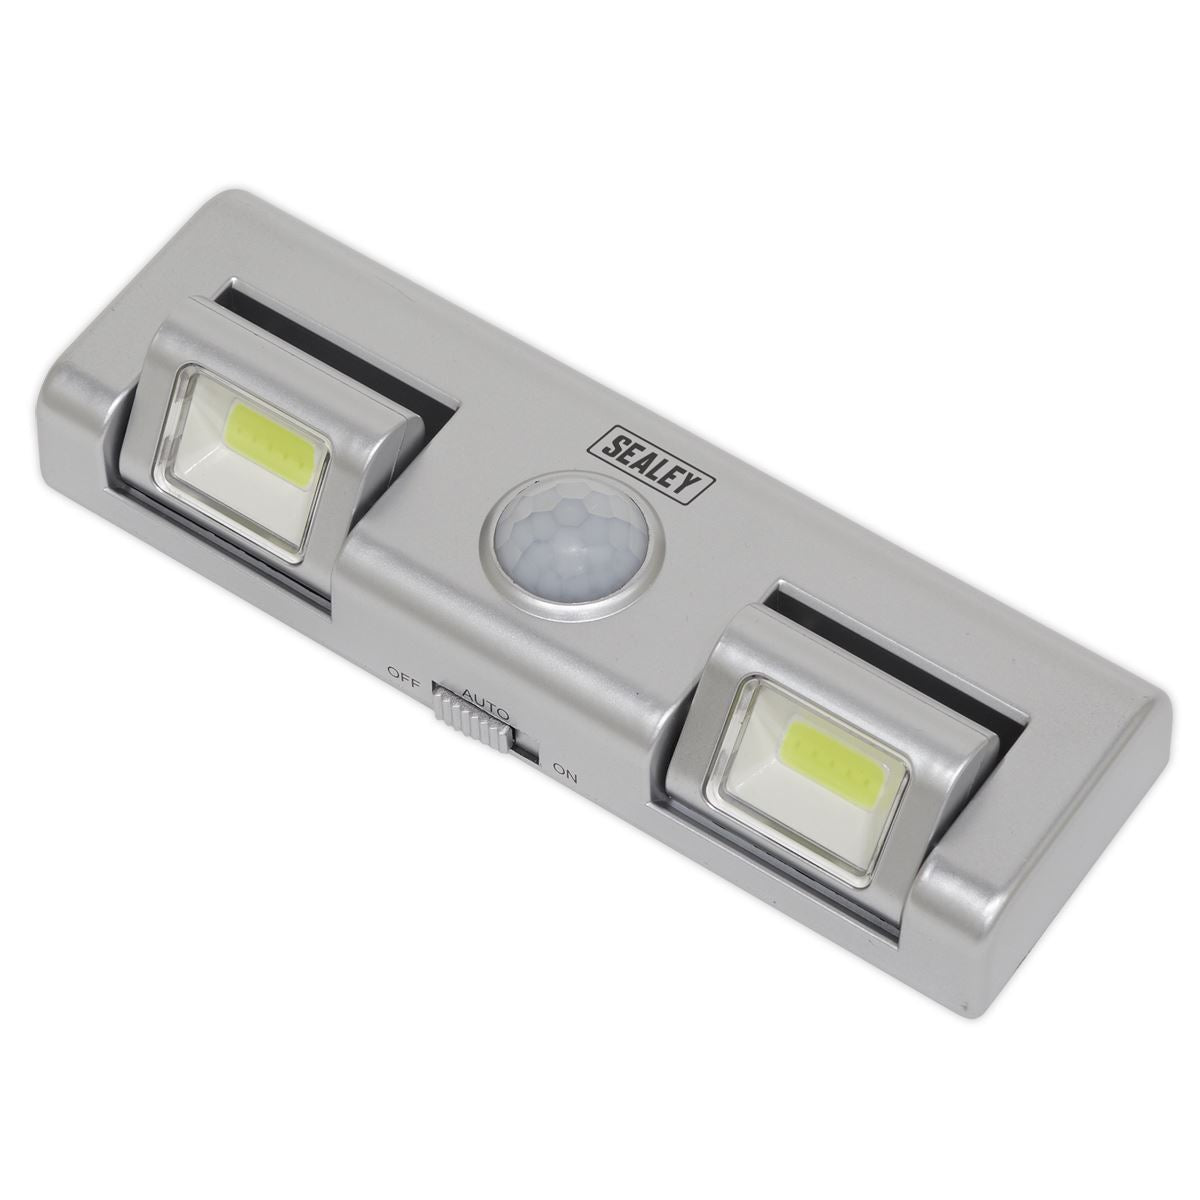 Sealey Auto Light 1W COB LED with PIR Sensor 3 x AA Cell